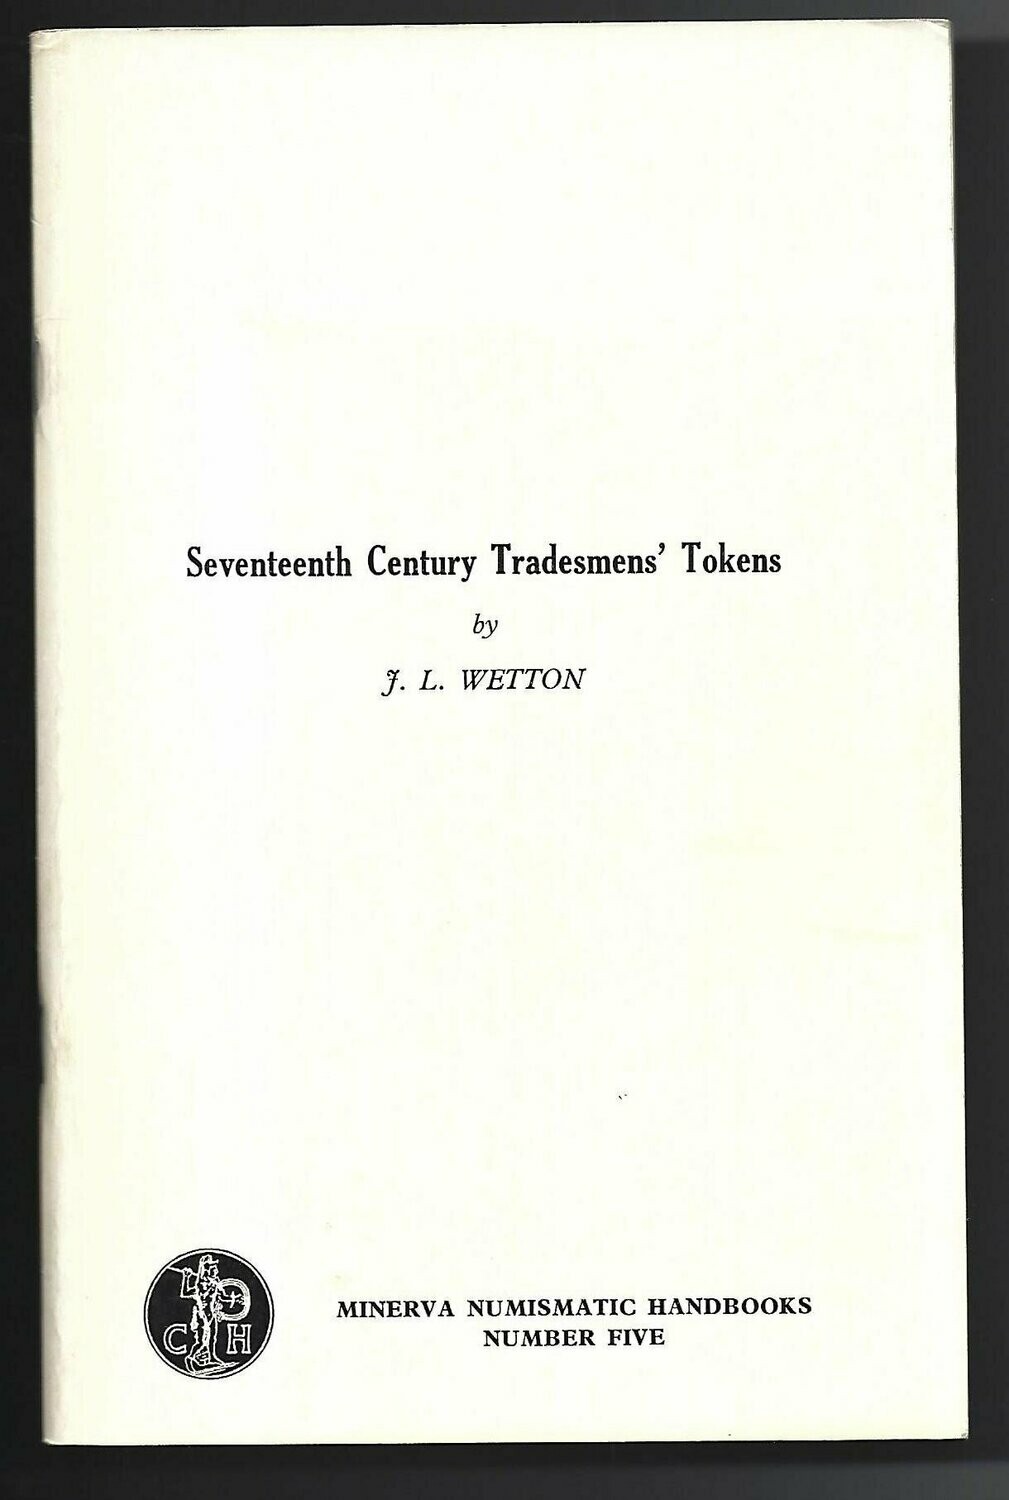 British; J.L. Wetton, "Seventeenth Century Tradesmens' Tokens."